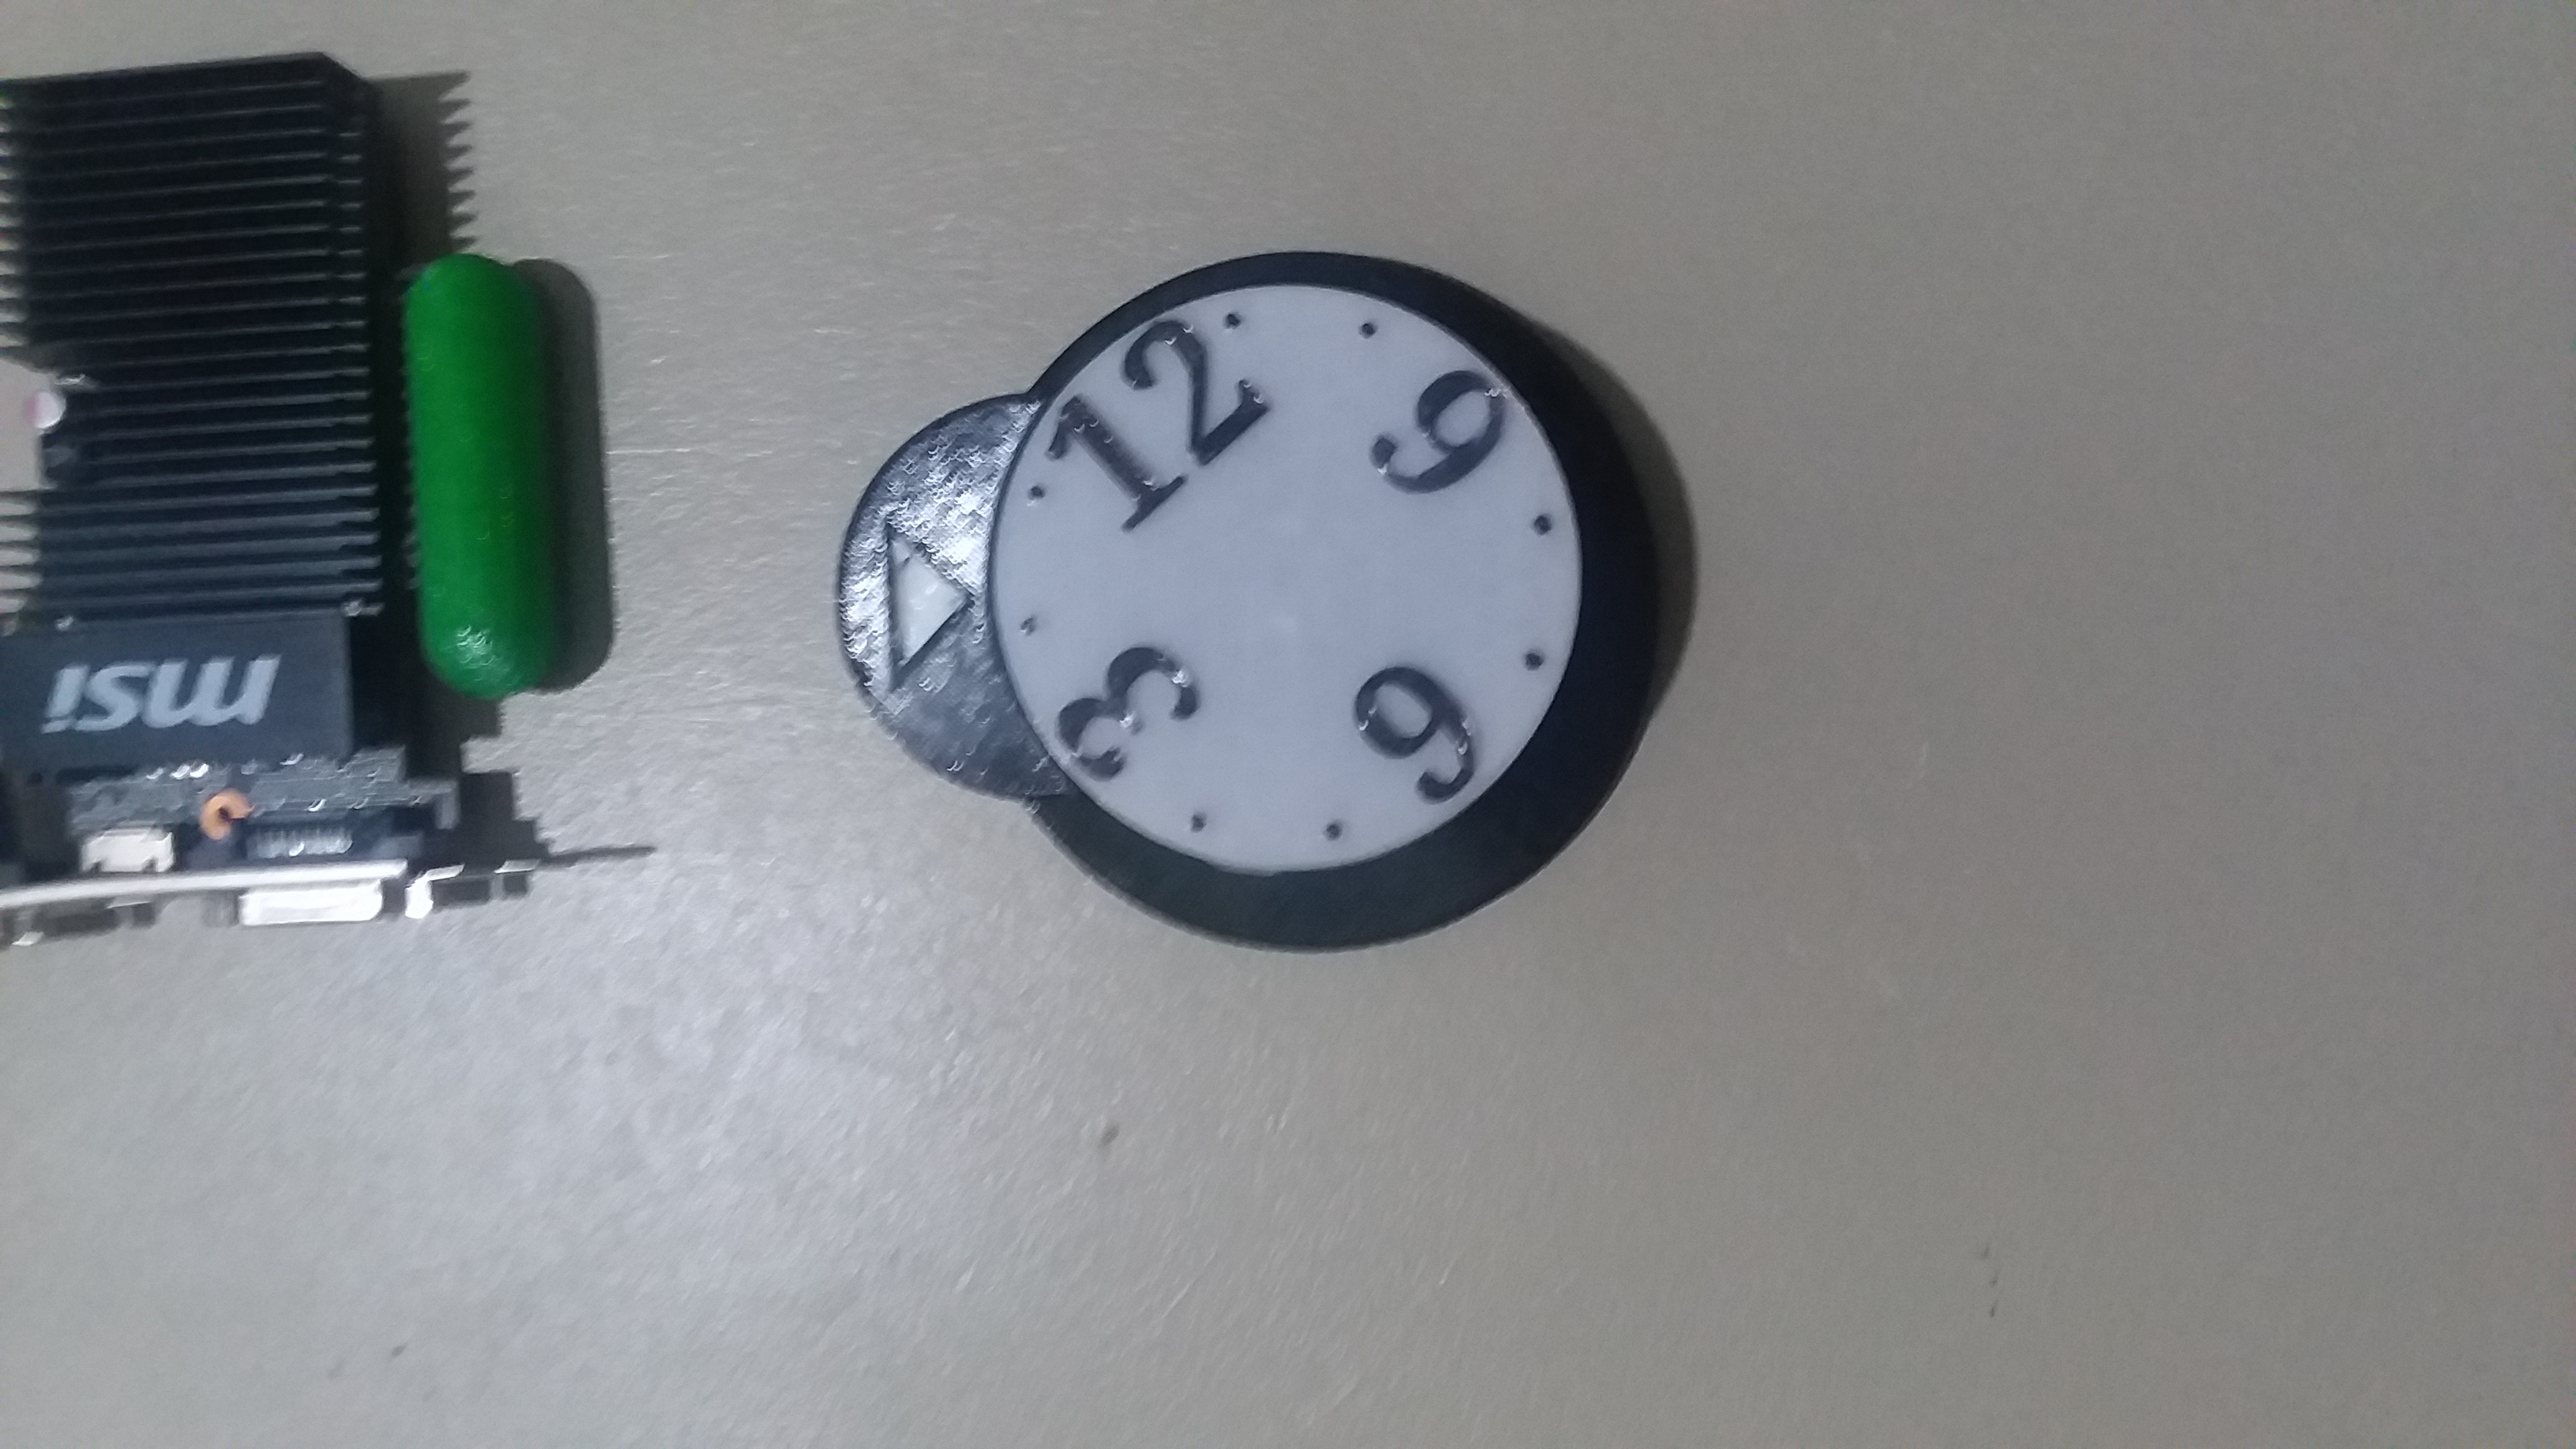 backwards wall clock